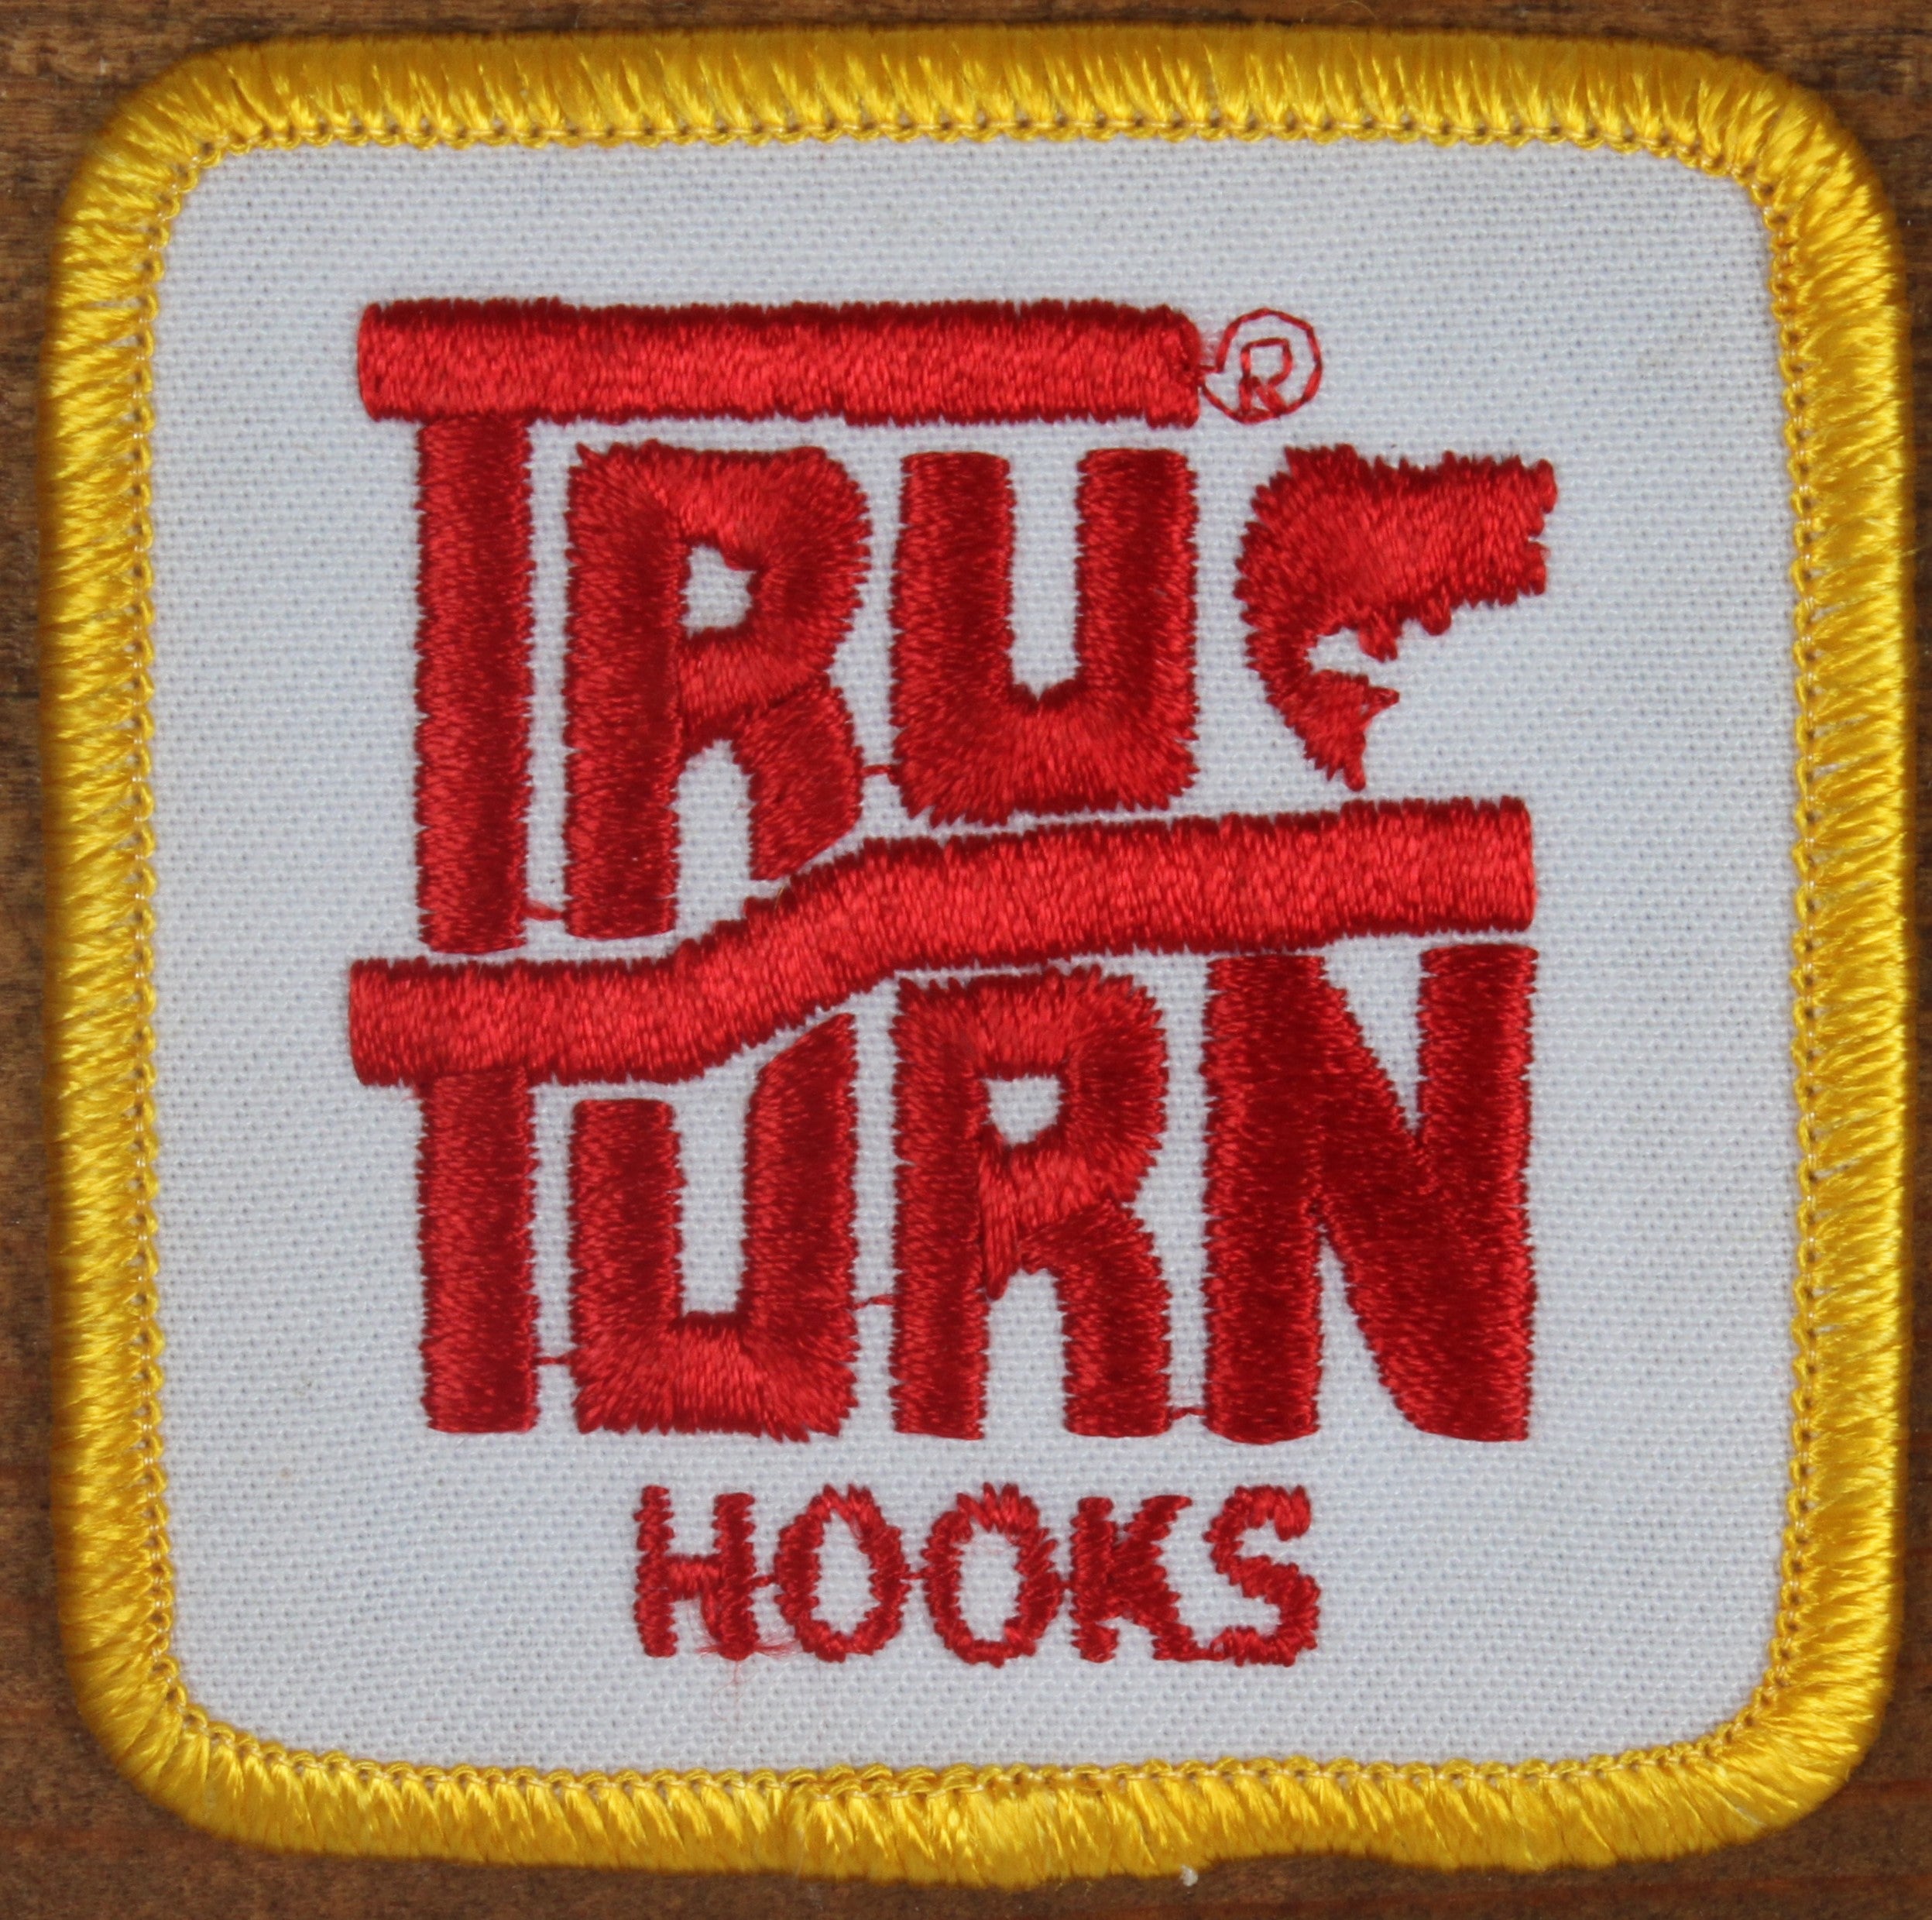 Vintage Tru Turn Hooks Patch – COLD CREEK HAT CO.